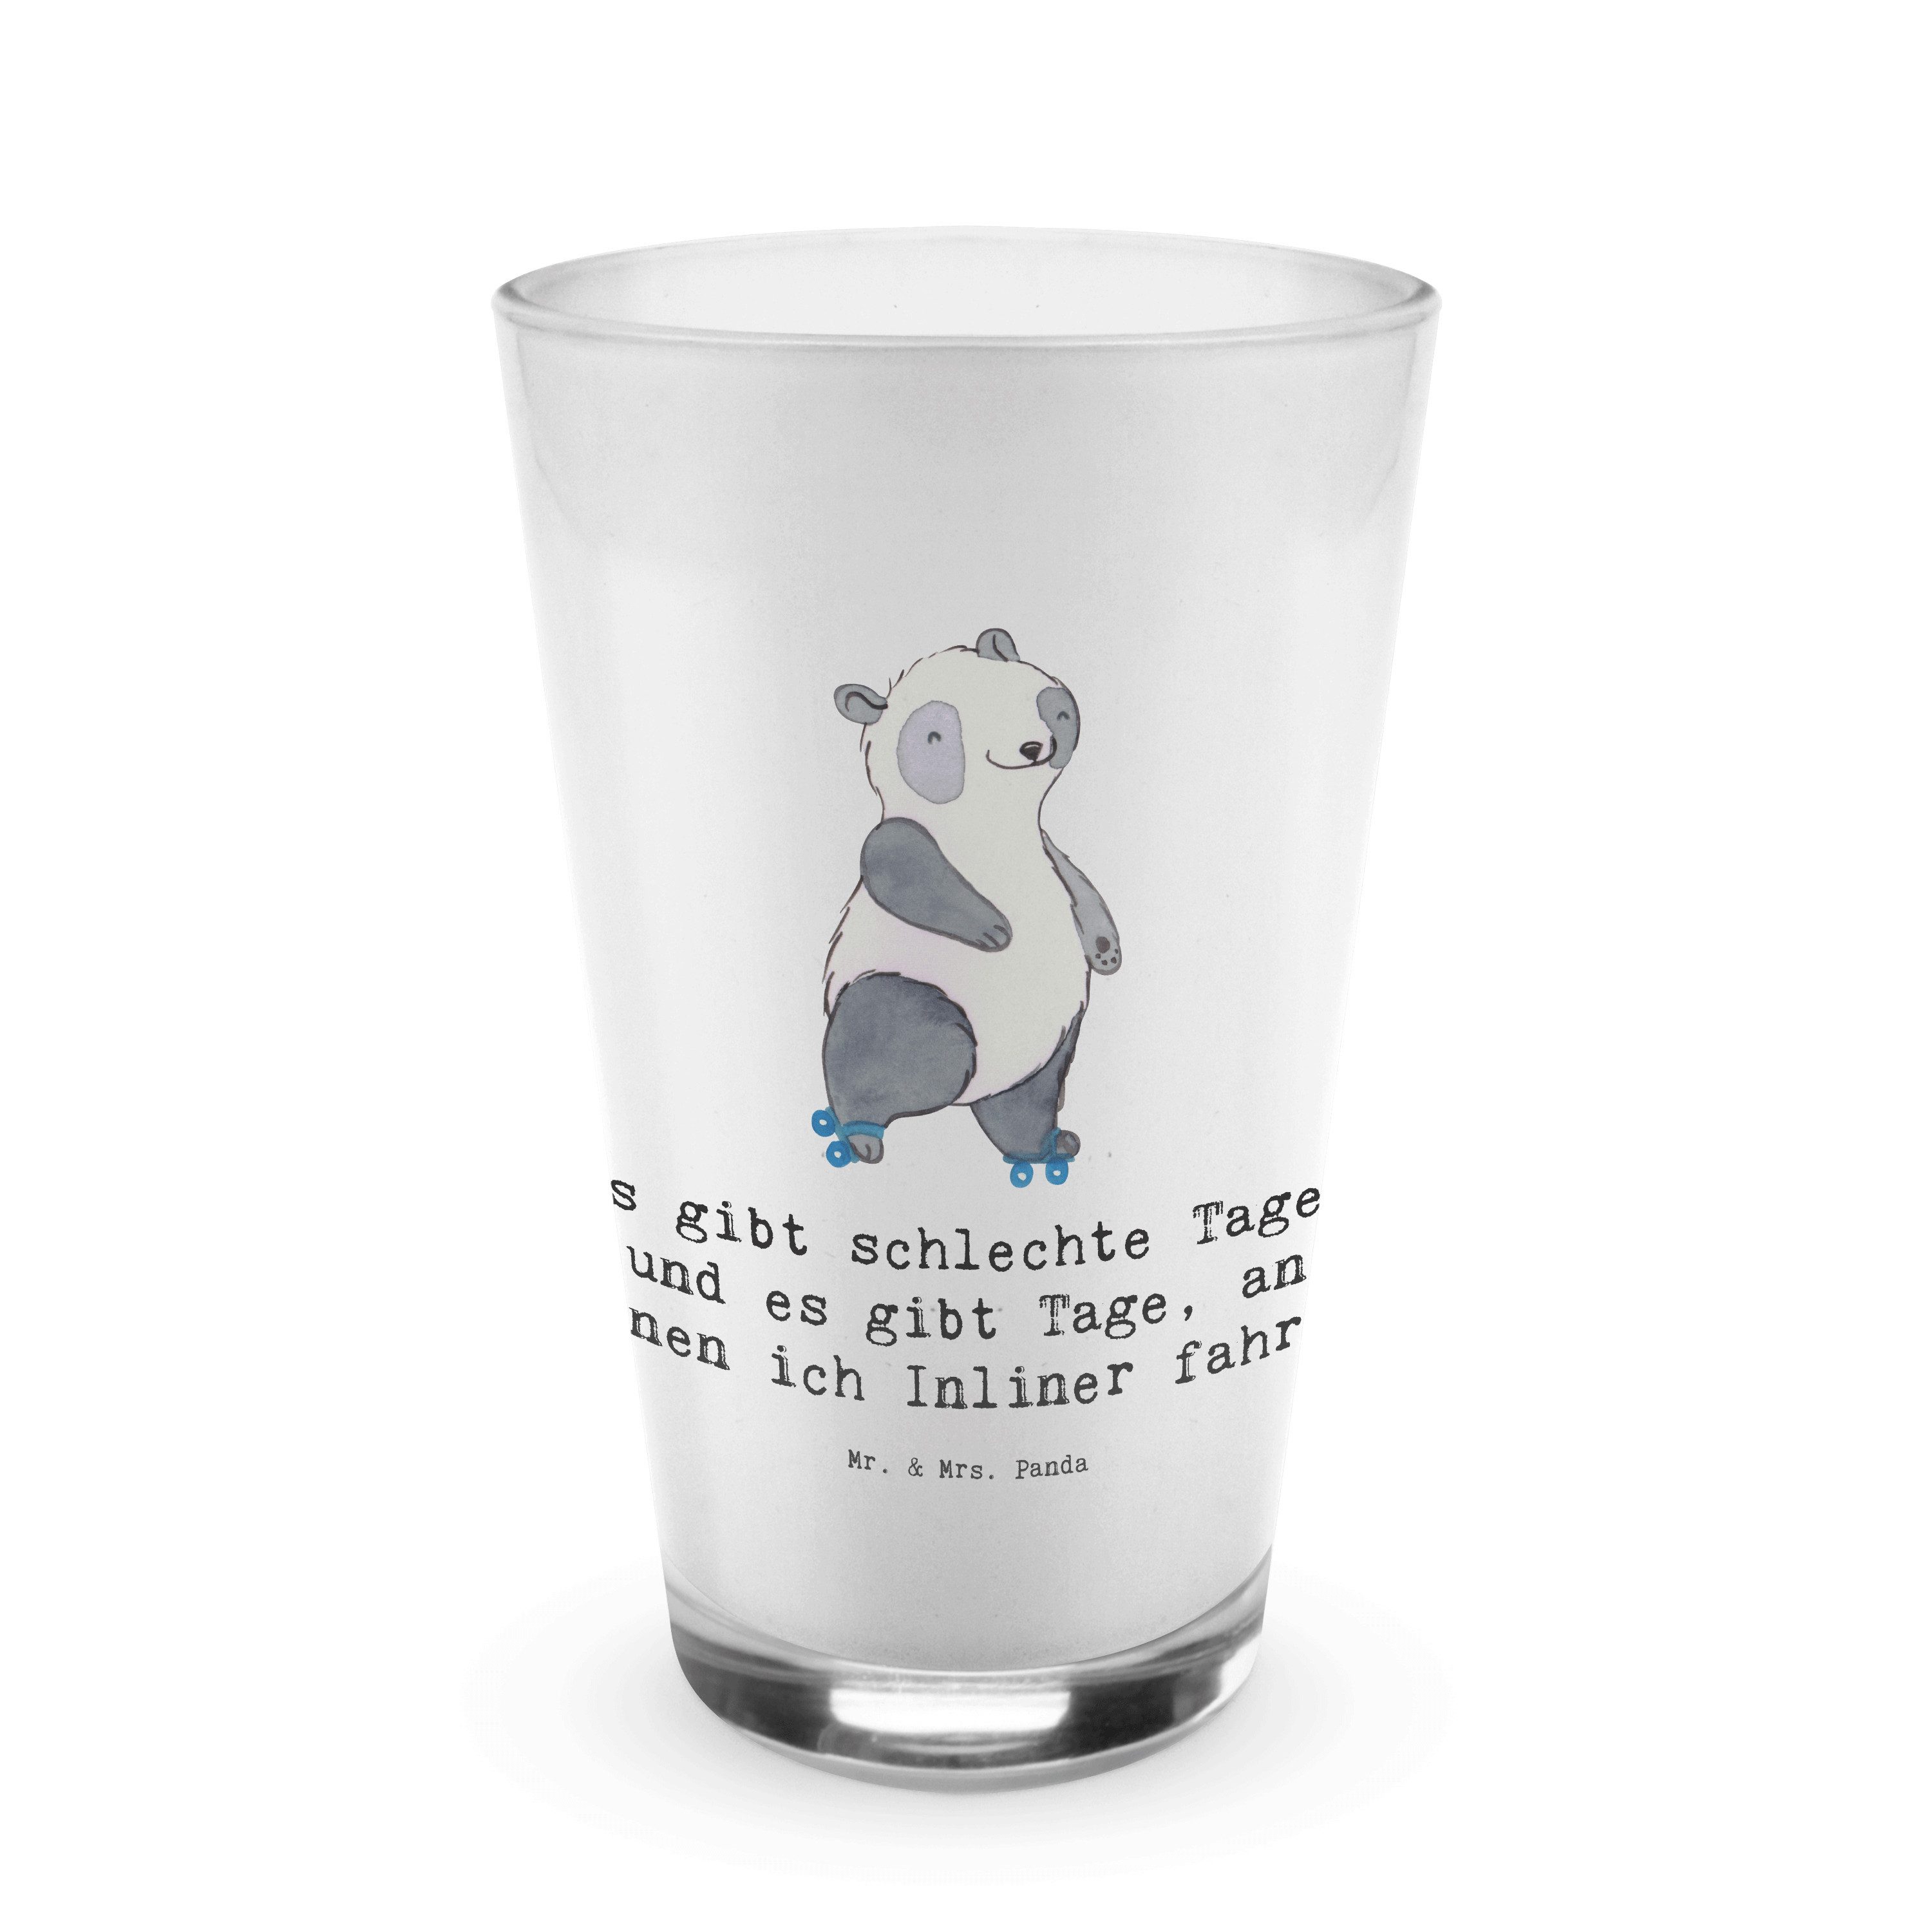 Mr. & Mrs. Panda Glas Panda Inliner fahren - Transparent - Geschenk, Latte Macchiato, Danke, Premium Glas, Fröhliche Motive